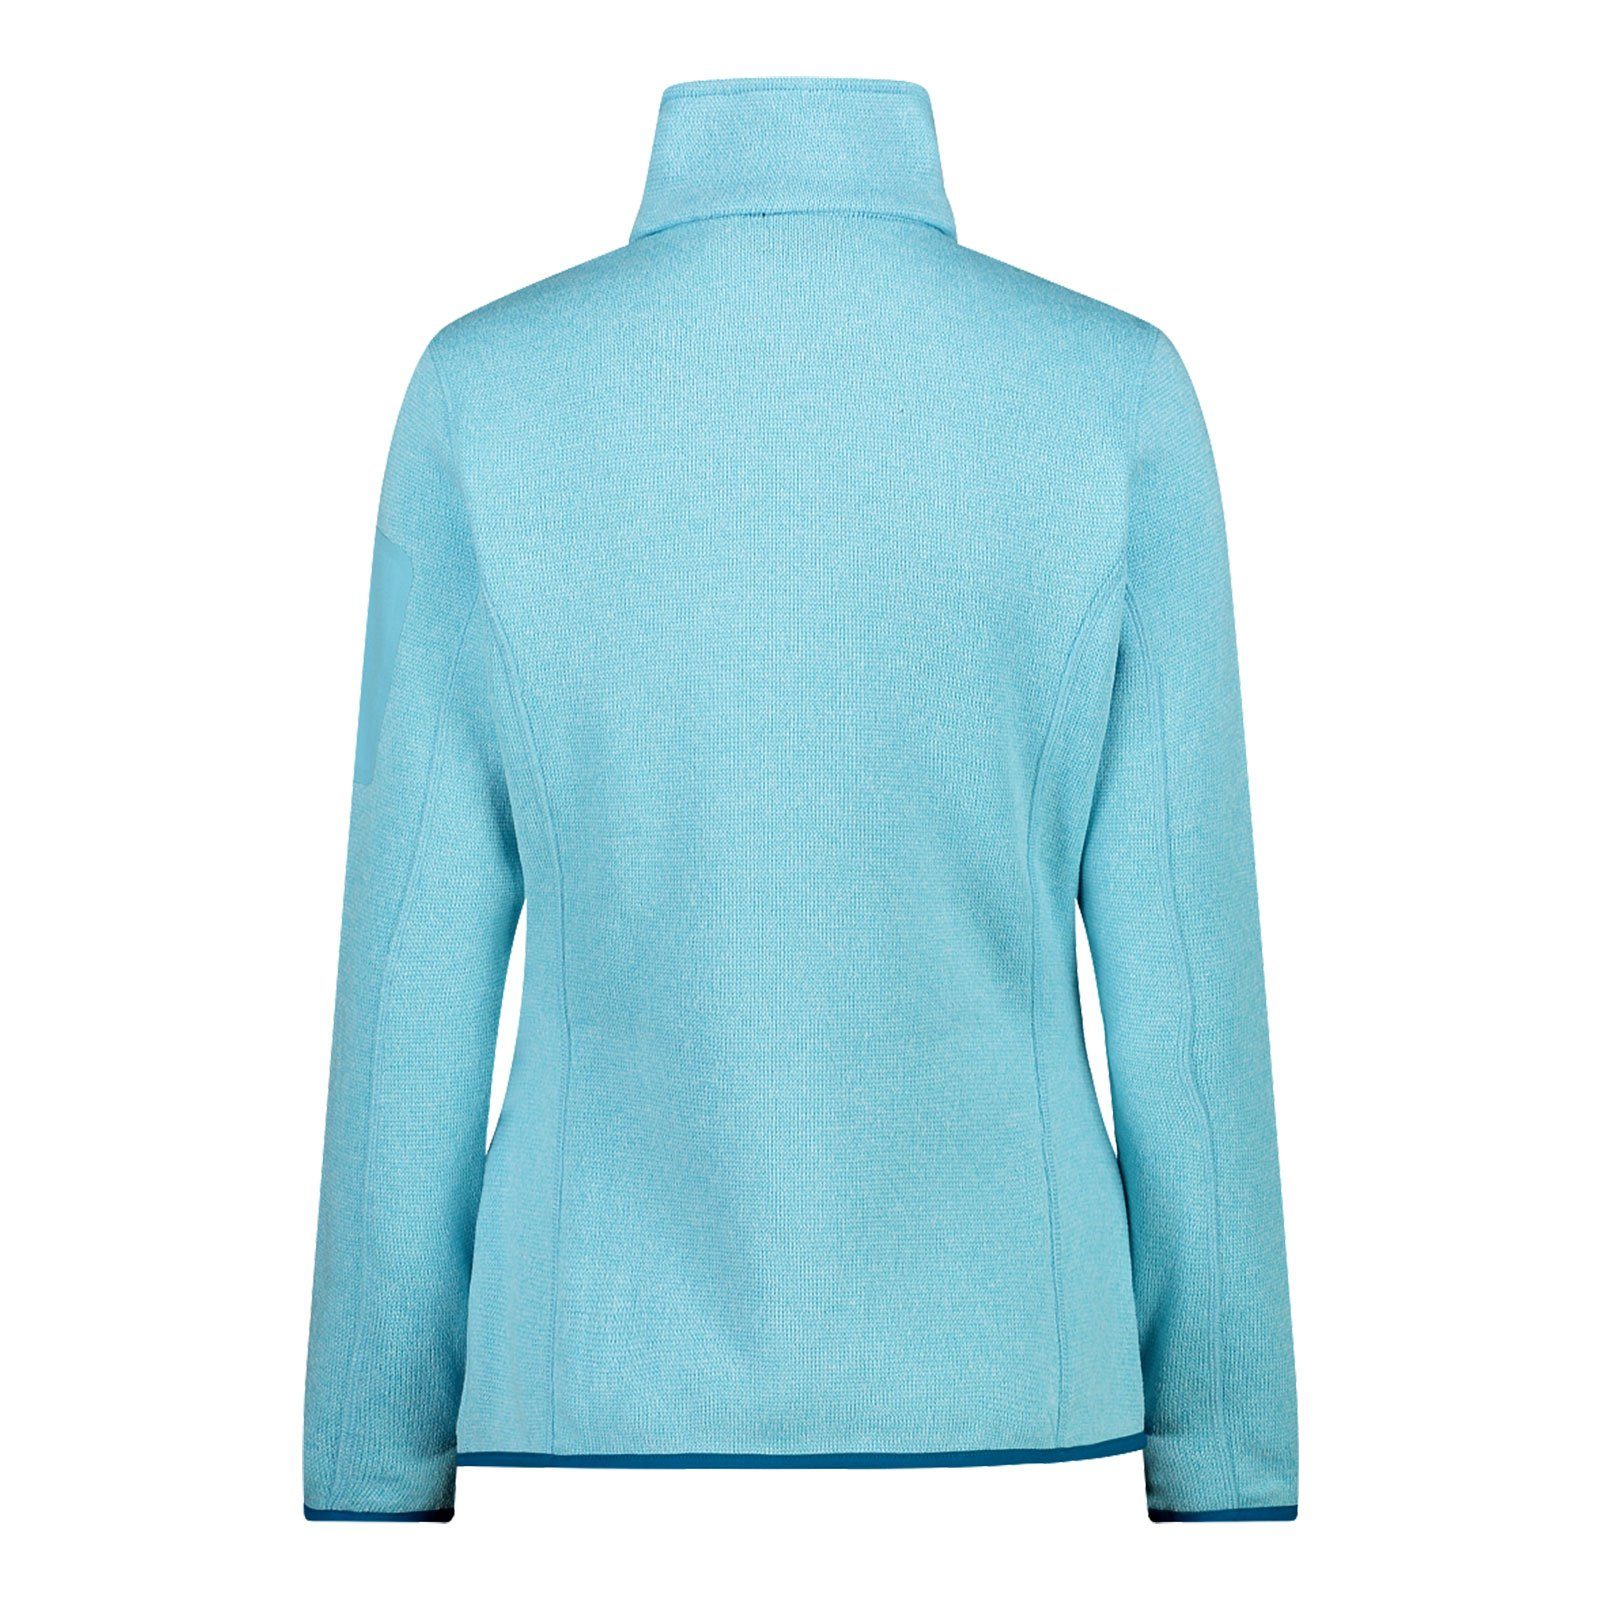 CMP Fleecejacke Woman Jacket aus Knit Material / Tech™ besonders giada anice 3H14746-10LP